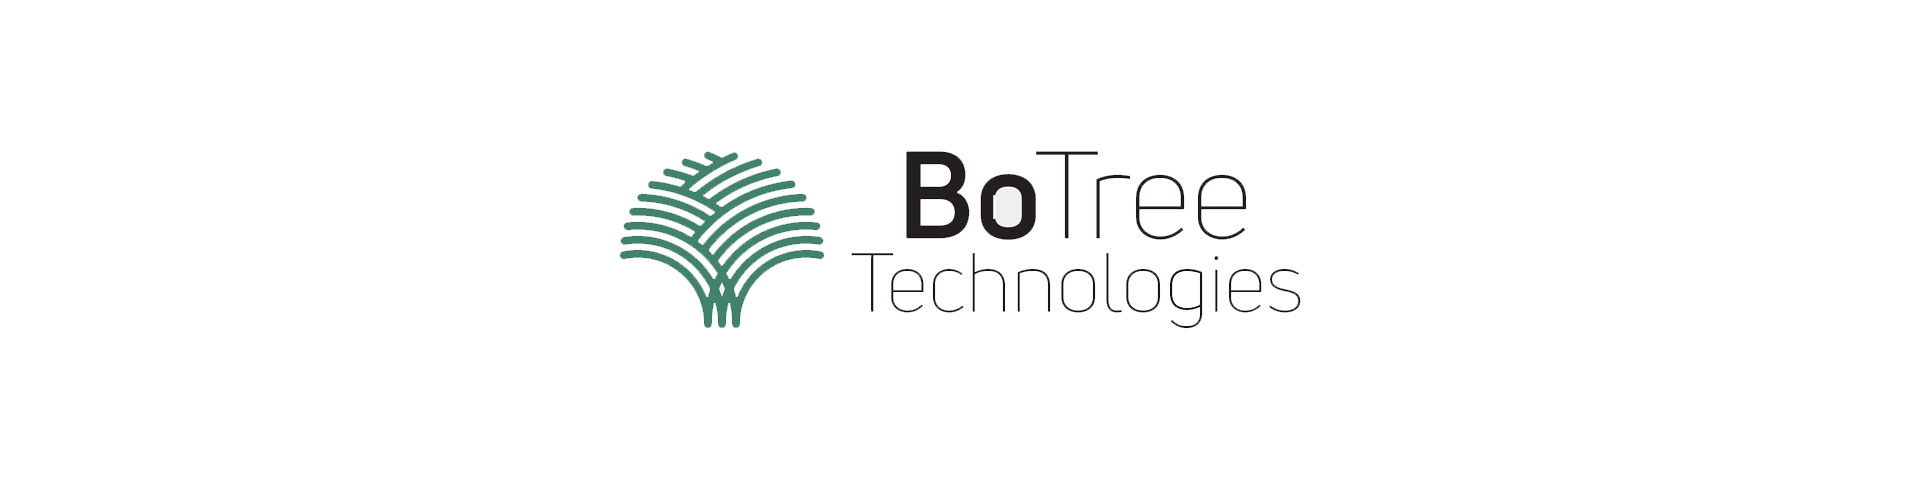 BoTree Technologies